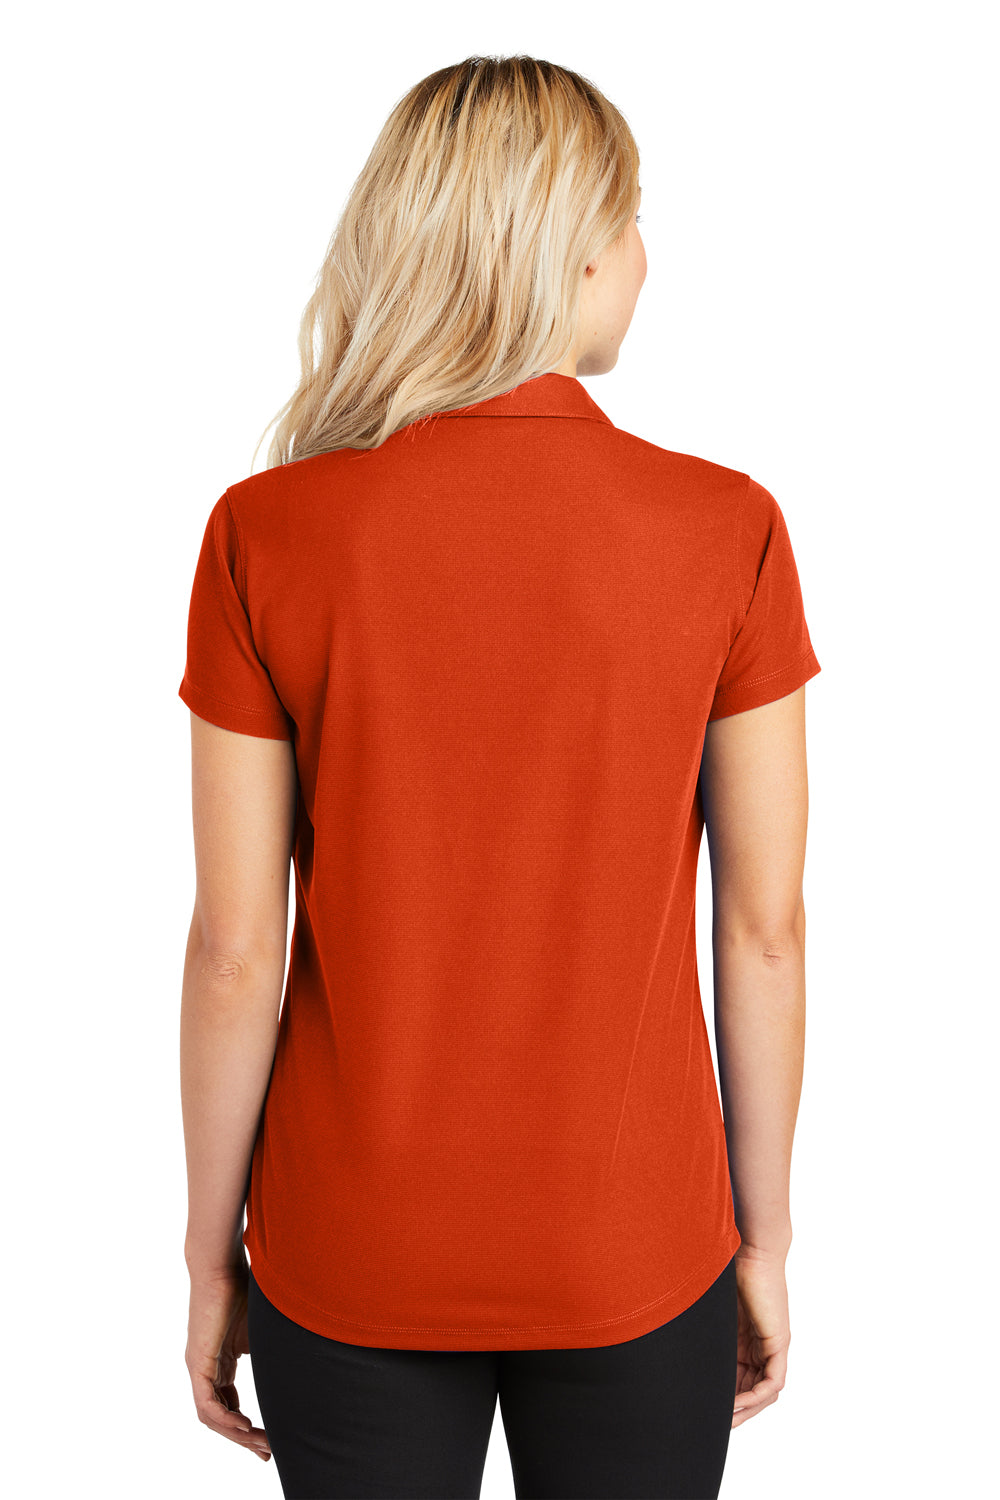 Port Authority L572 Womens Dry Zone Moisture Wicking Short Sleeve Polo Shirt Autumn Orange Back